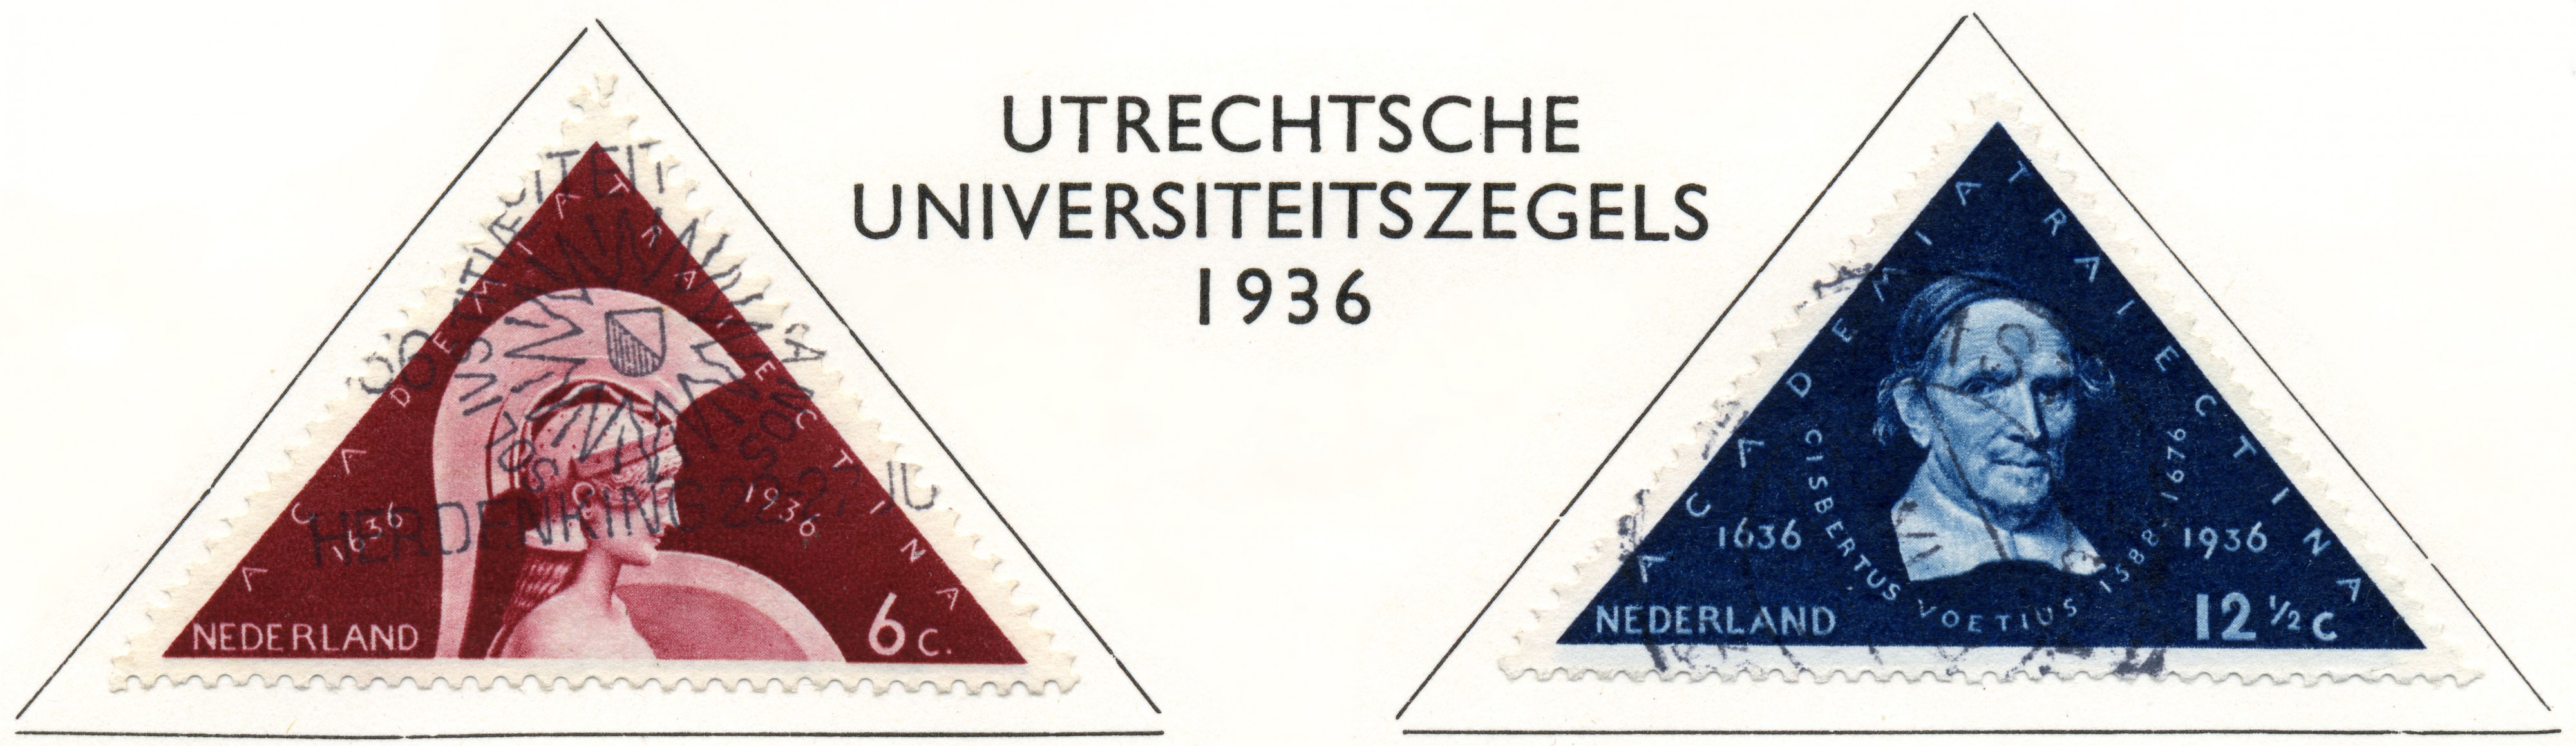 Postzegel 1936 universiteit